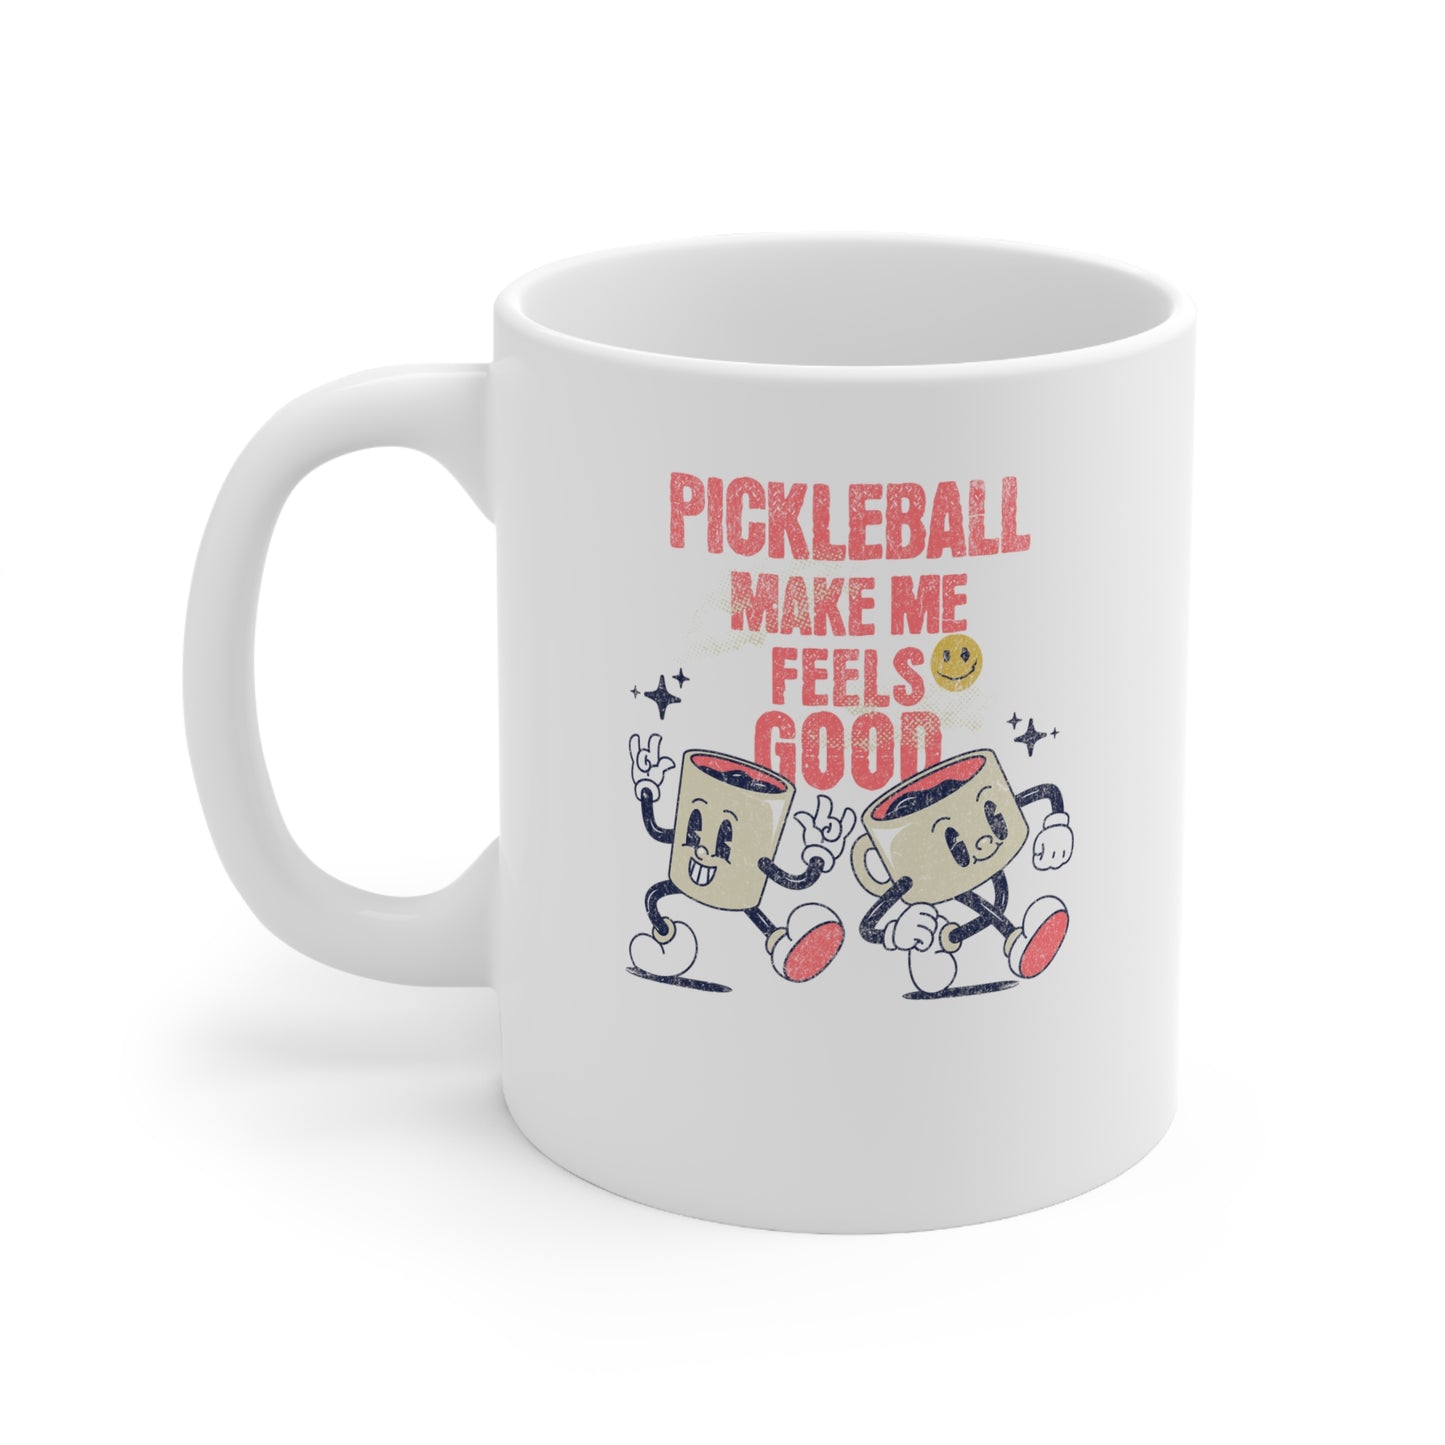 Pickleball Passion Coffee Mug – Pickleball Makes Me Feel Good